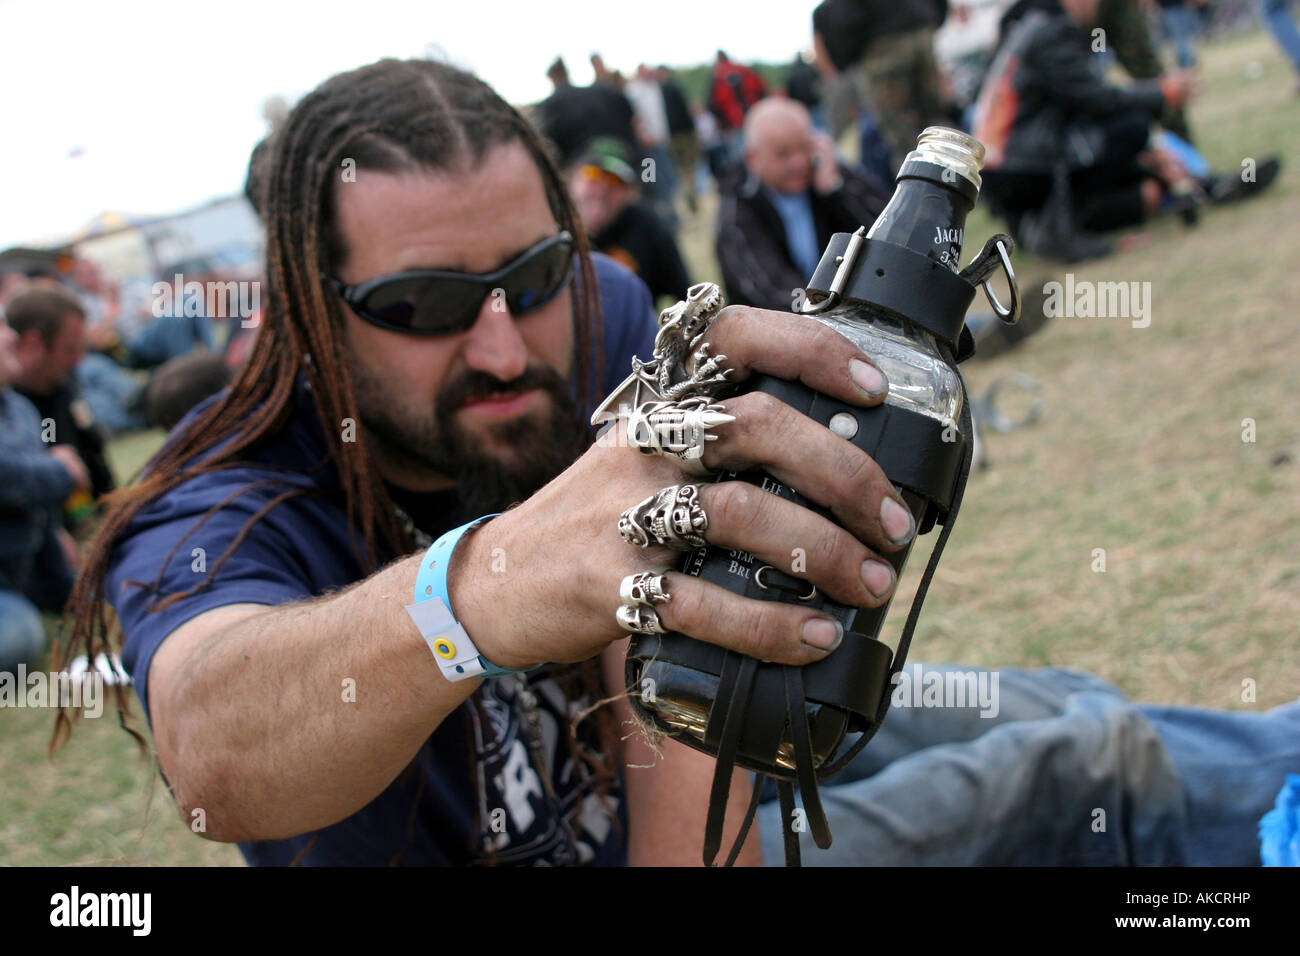 A fan at Heavy Metal rock festival Bulldog Bash in 2006 Stock Photo